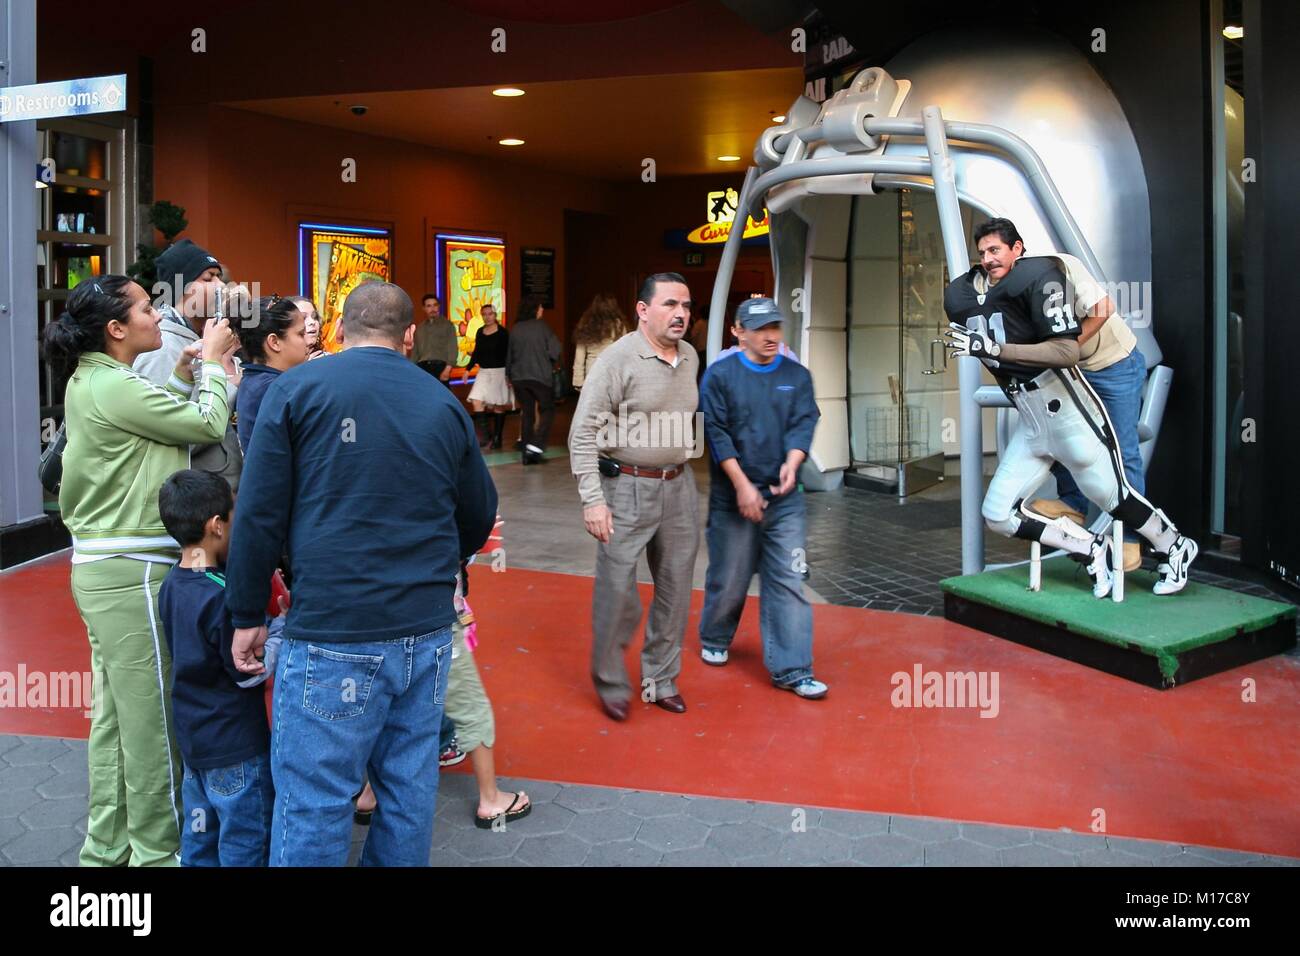 NFL, The Raider Image in Universal City Walk. Stock Photo